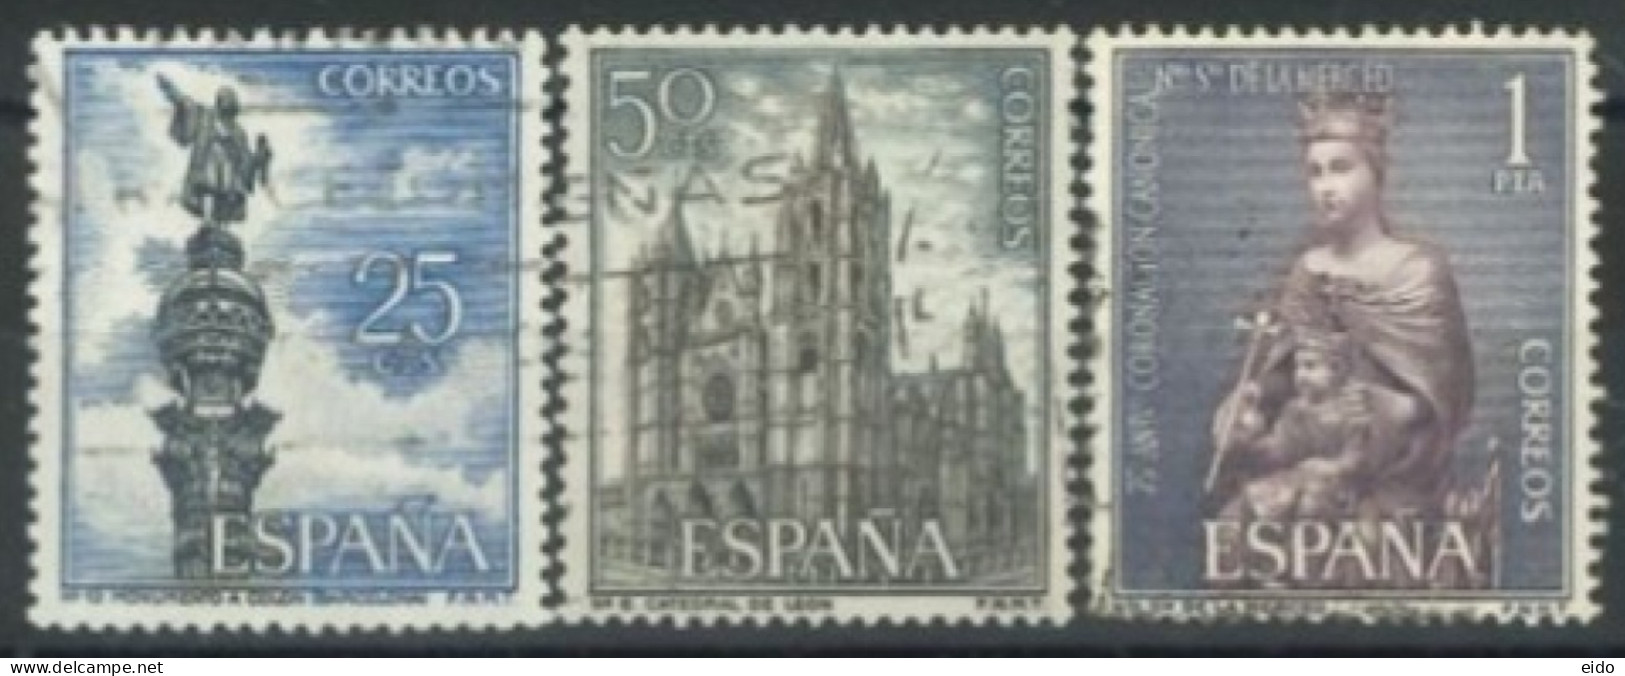 SPAIN, 1963/65, COLUMBUS MONUMENT, LEON CATHEDRAL & ST. DE LA MERCED STAMPS SET OF 3, # 1280,1201,& 1205, USED. - Usati